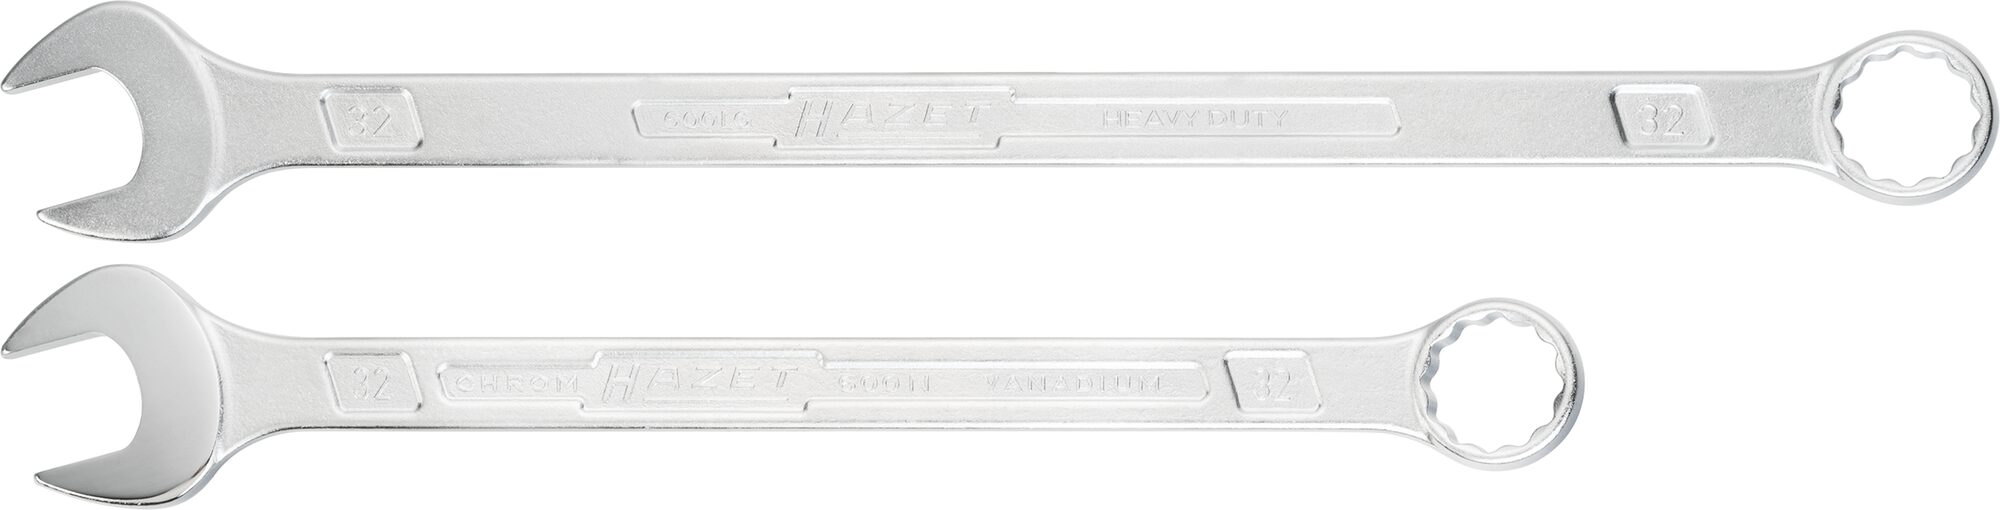 HAZET Ring-Maulschlüssel · extra lang · schlanke Bauform 600LG-36 · Außen Doppel-Sechskant-Tractionsprofil · 36 mm